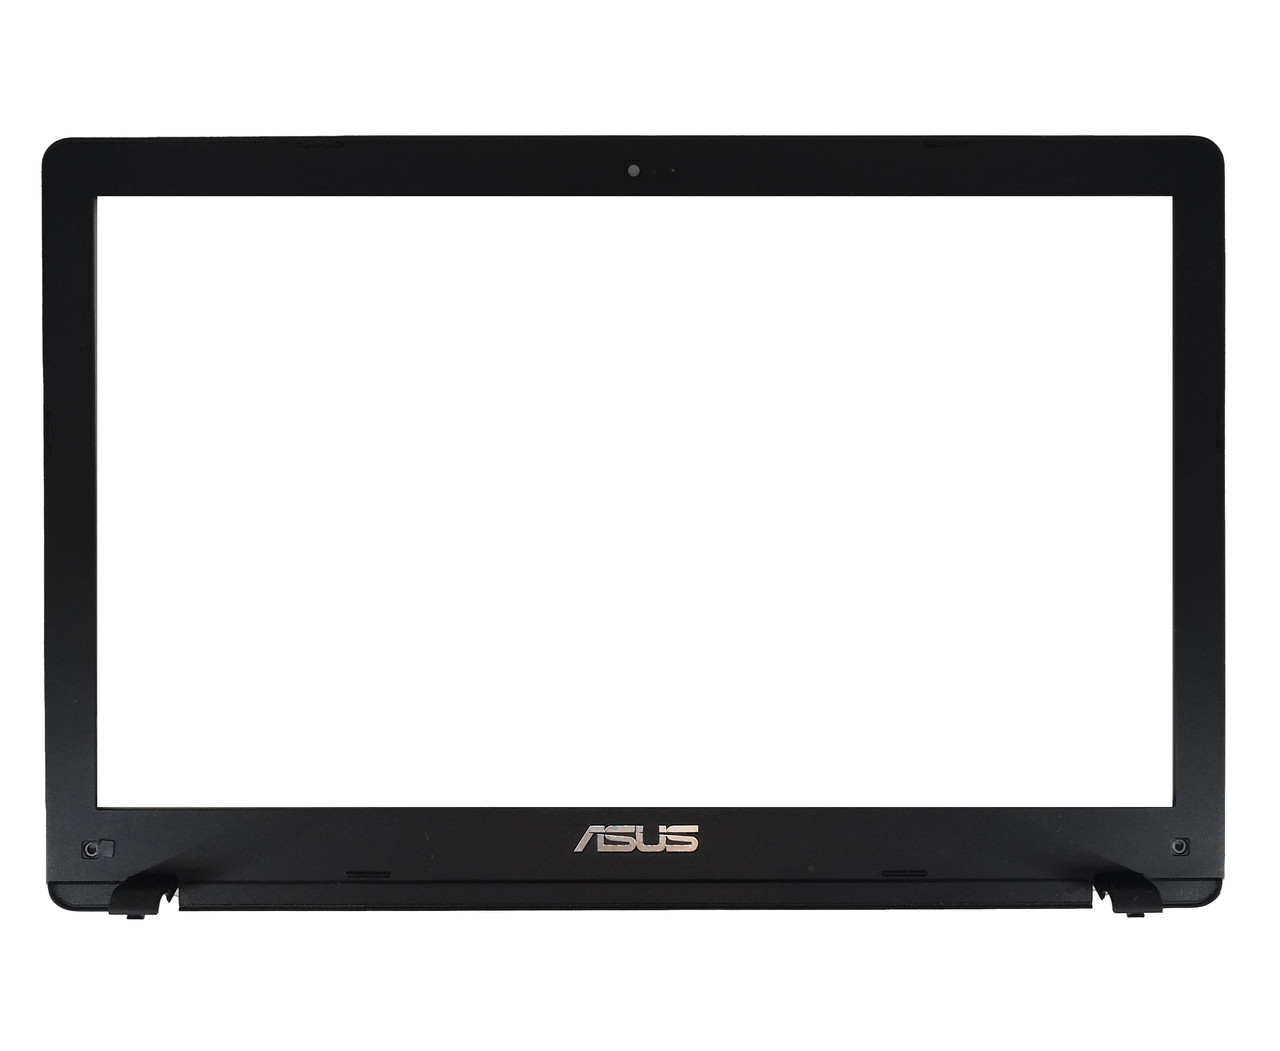 Рамка крышки матрицы Asus VivoBook X550, для крышки со Slim матрицей, черная